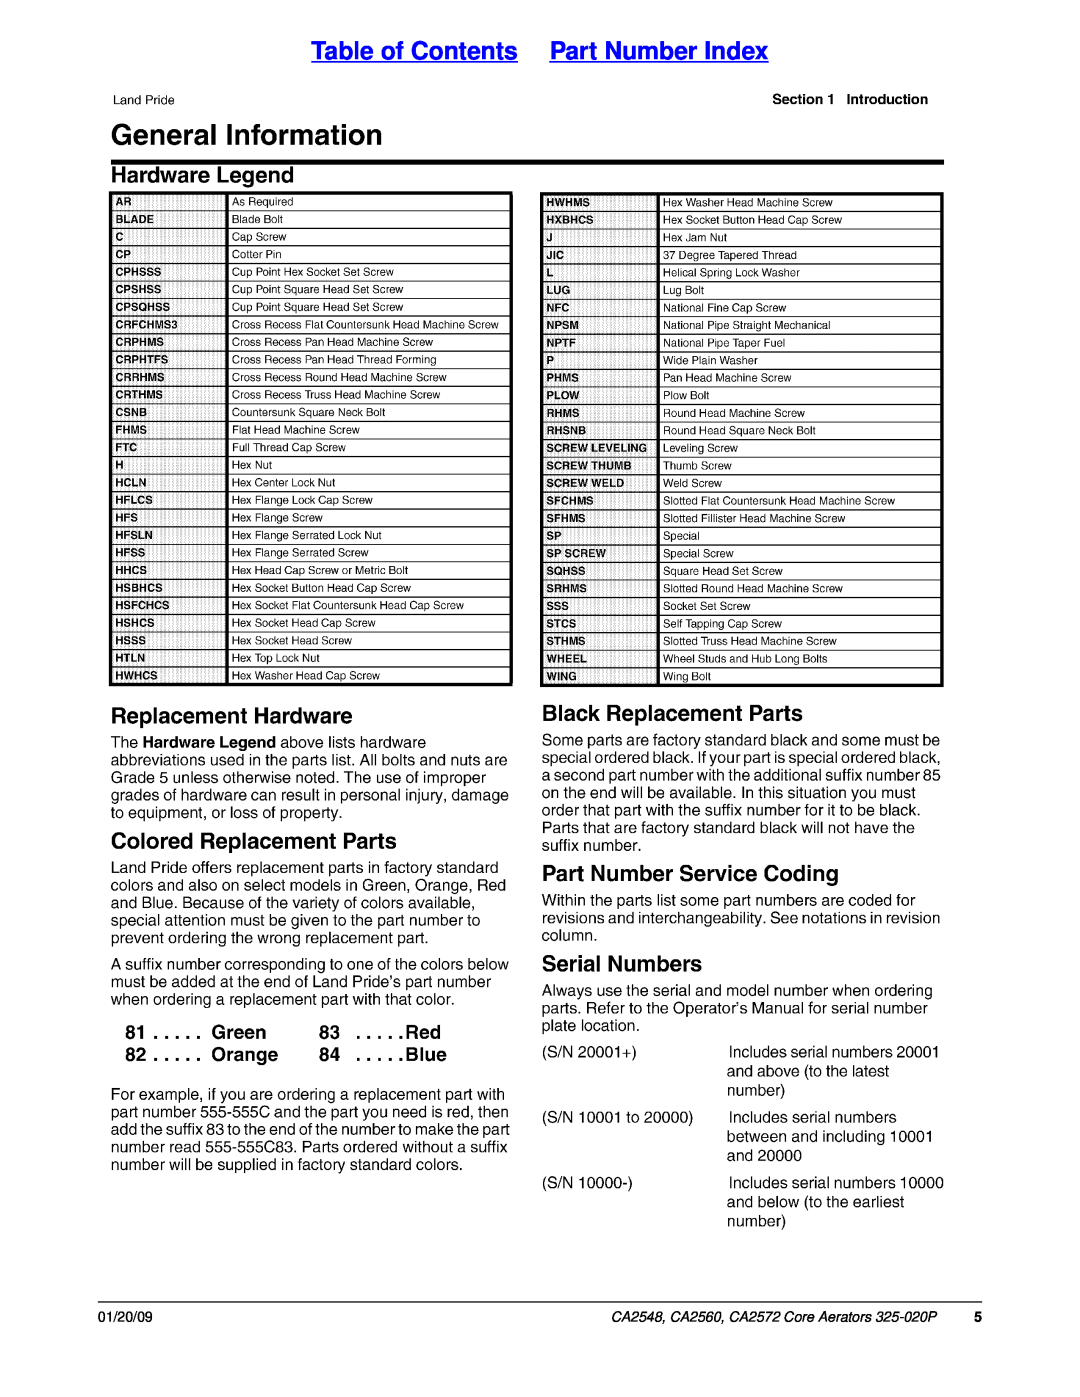 Land Pride manual Table of Contents Part Number Index, CA2548, CA2560, CA2572 Core Aerators 325-020P, 01/20/09 